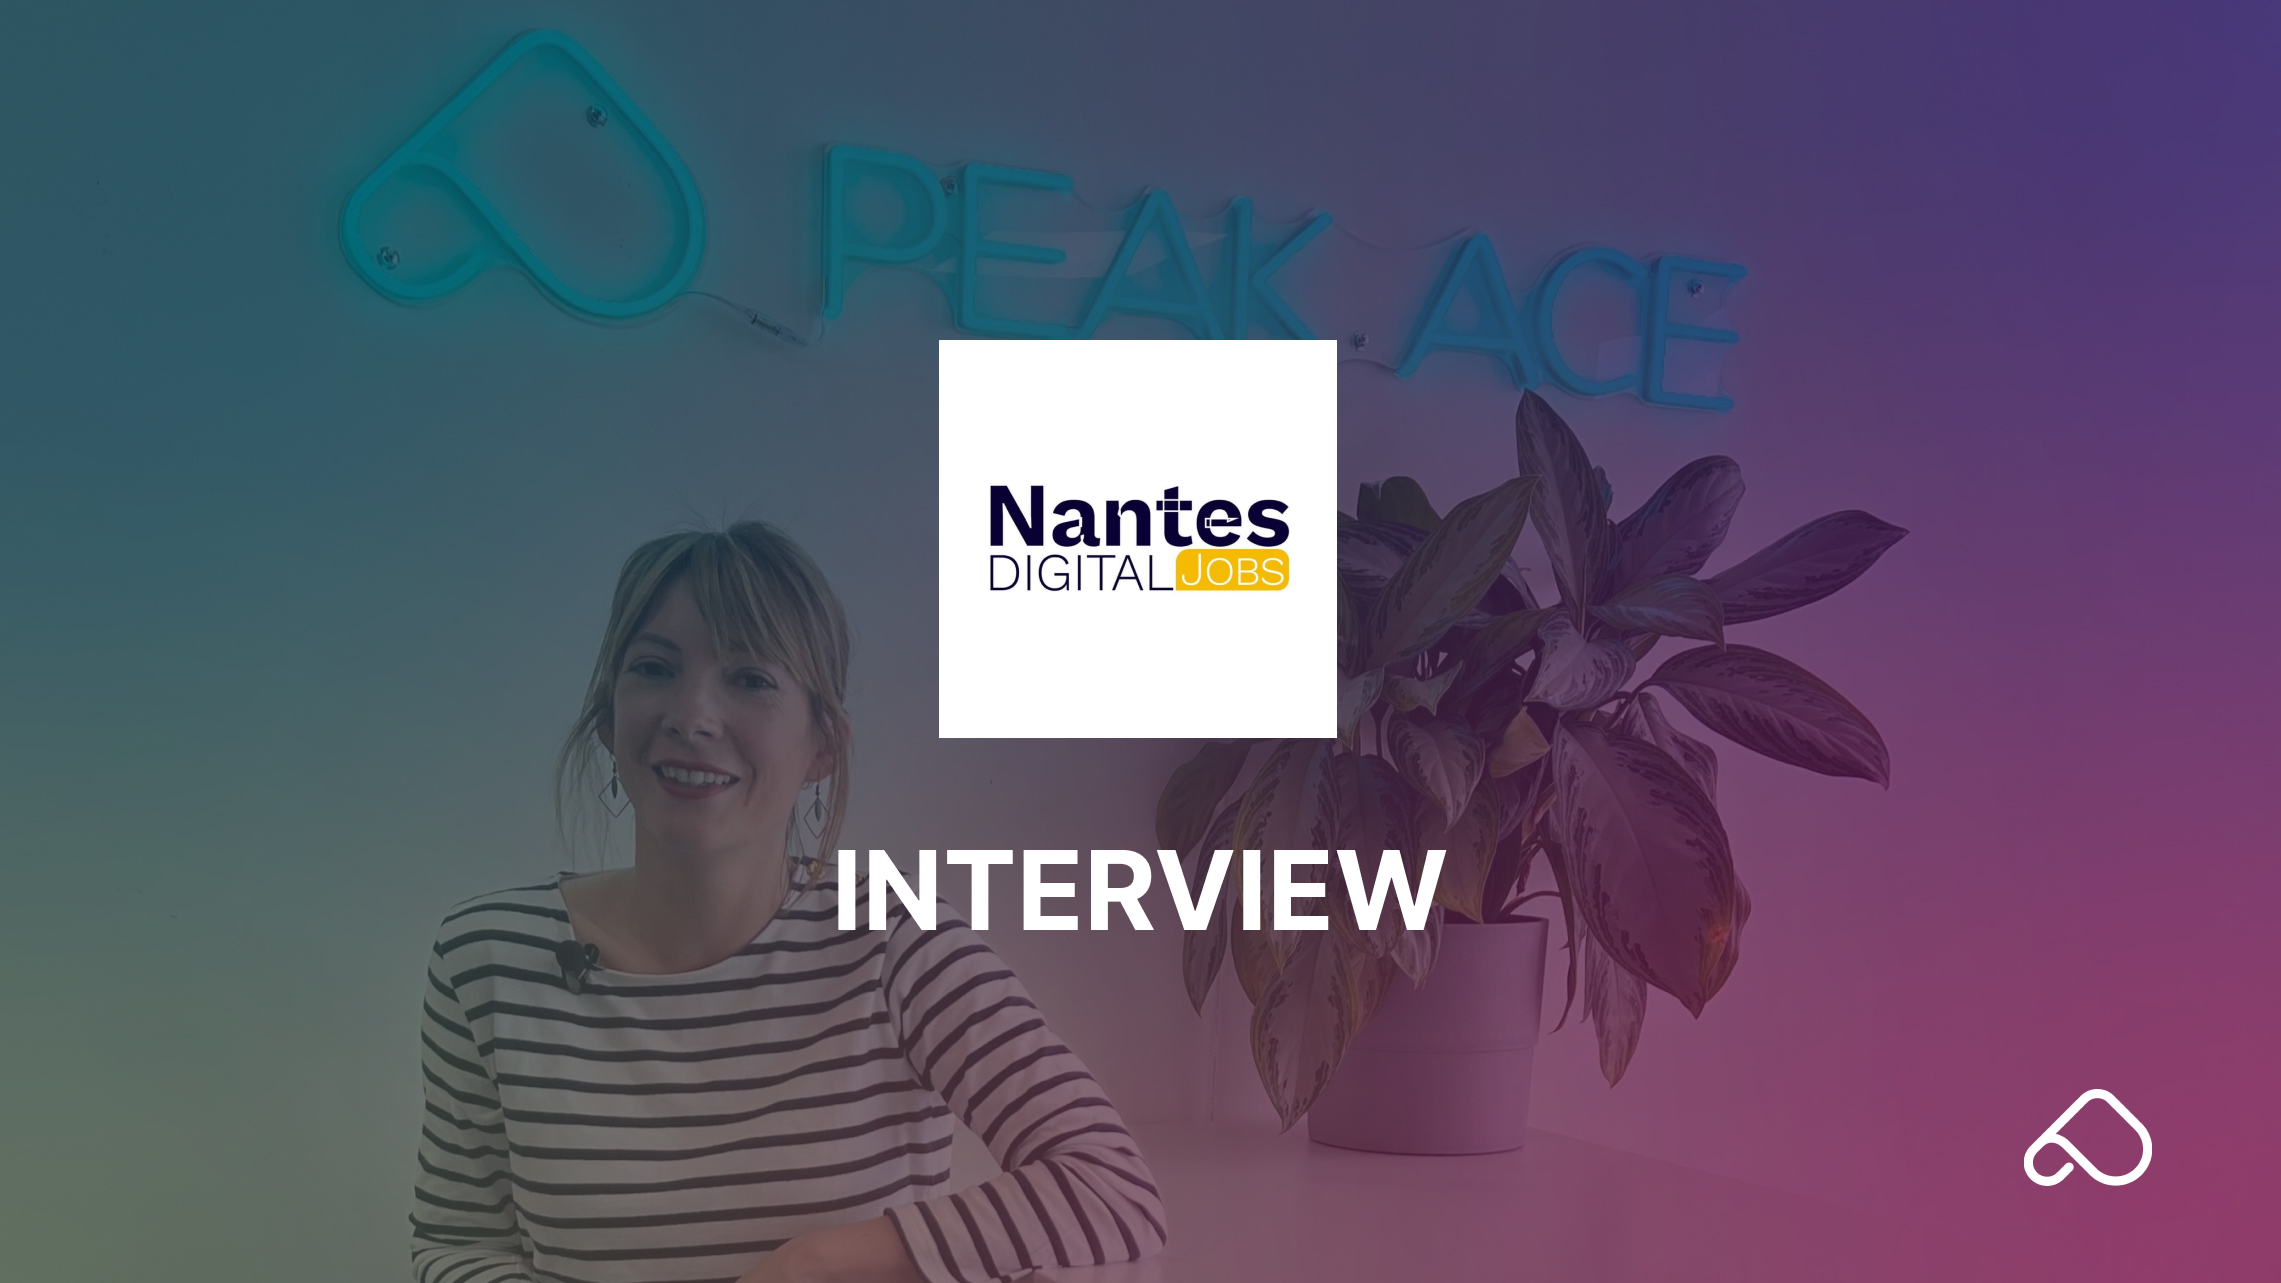 Nantes digital Jobs x Peak Ace